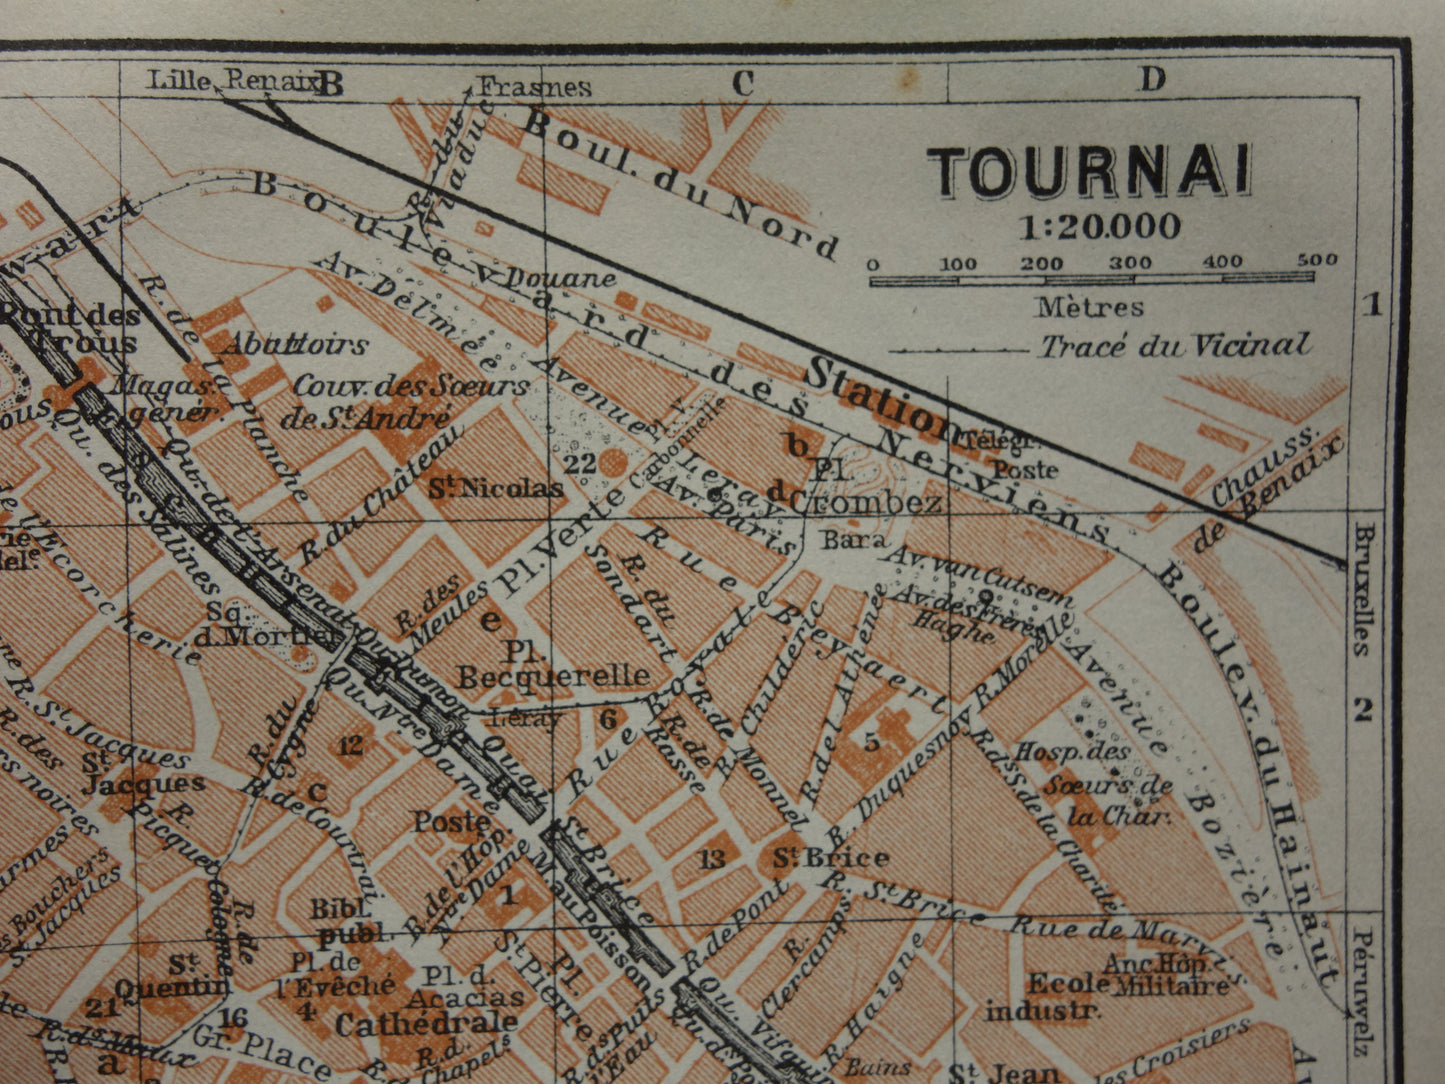 TOURNAI oude kaart van Doornik België uit 1914 kleine originele antieke plattegrond landkaart Tournai / Doornik